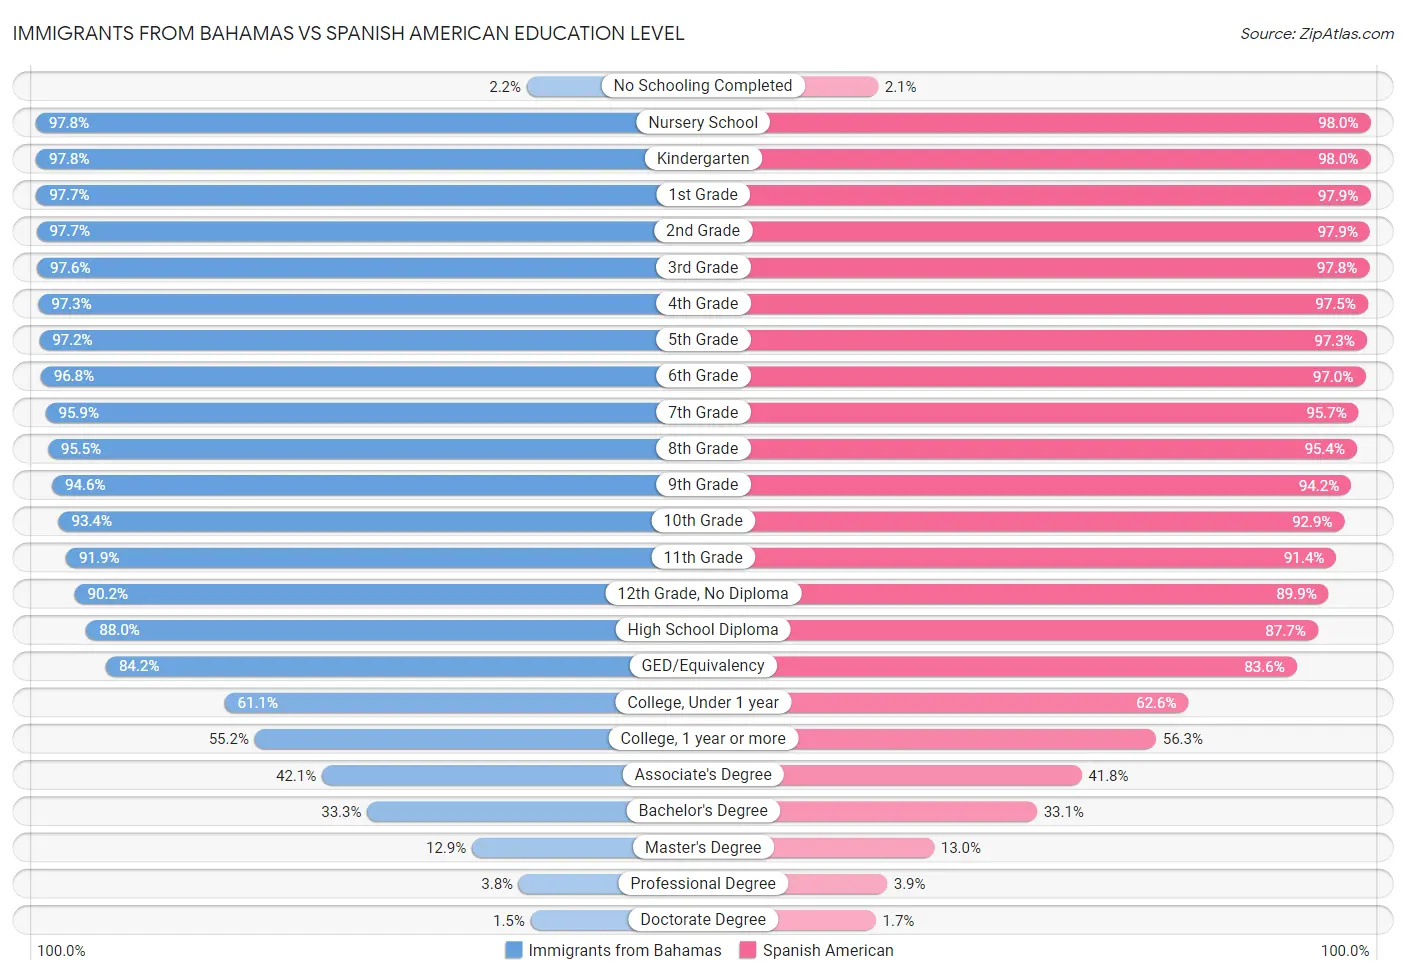 Immigrants from Bahamas vs Spanish American Education Level